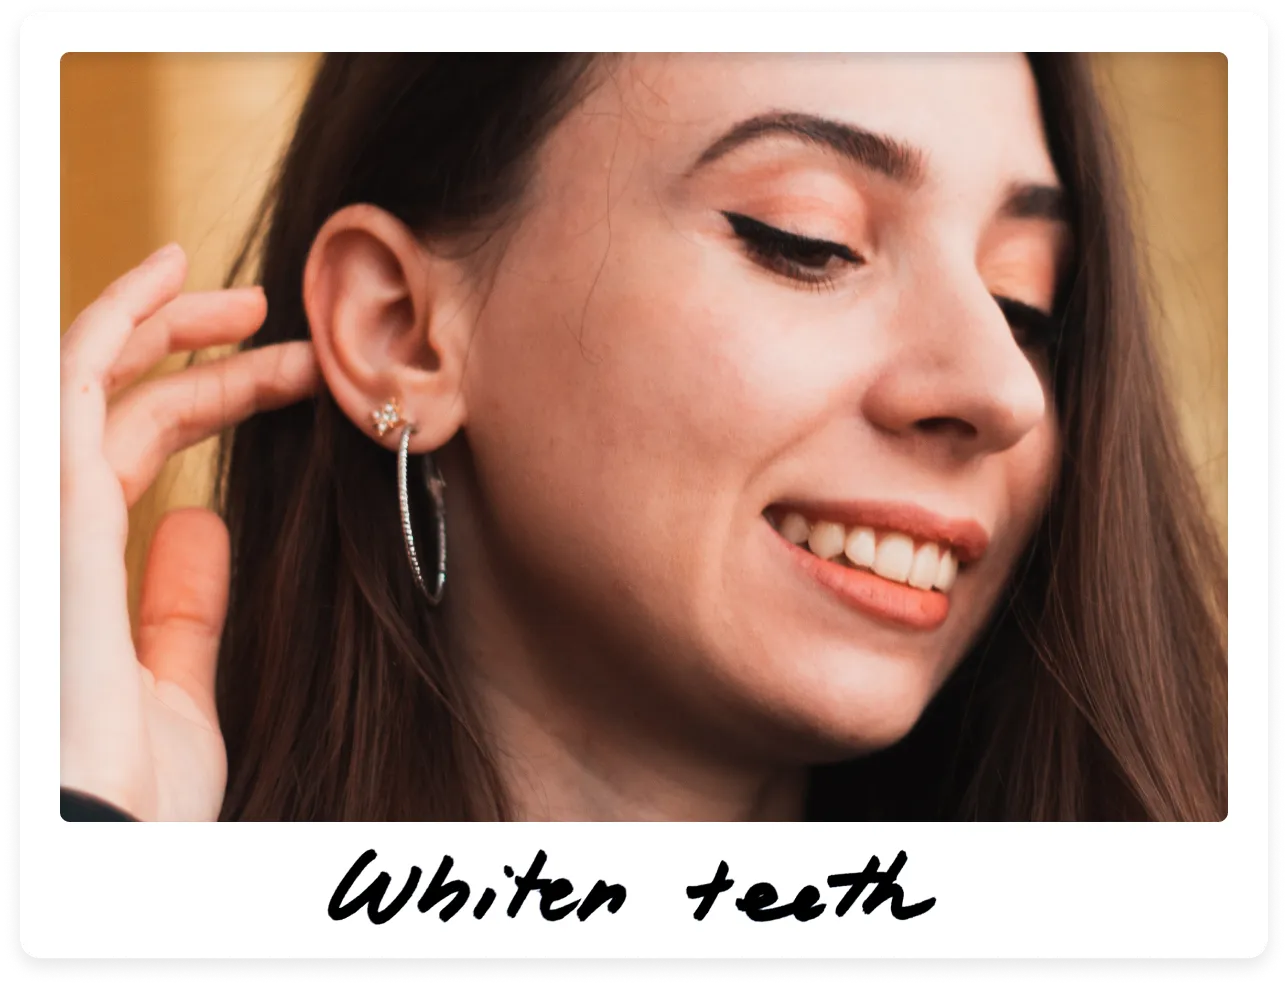 Whiten teeth demo